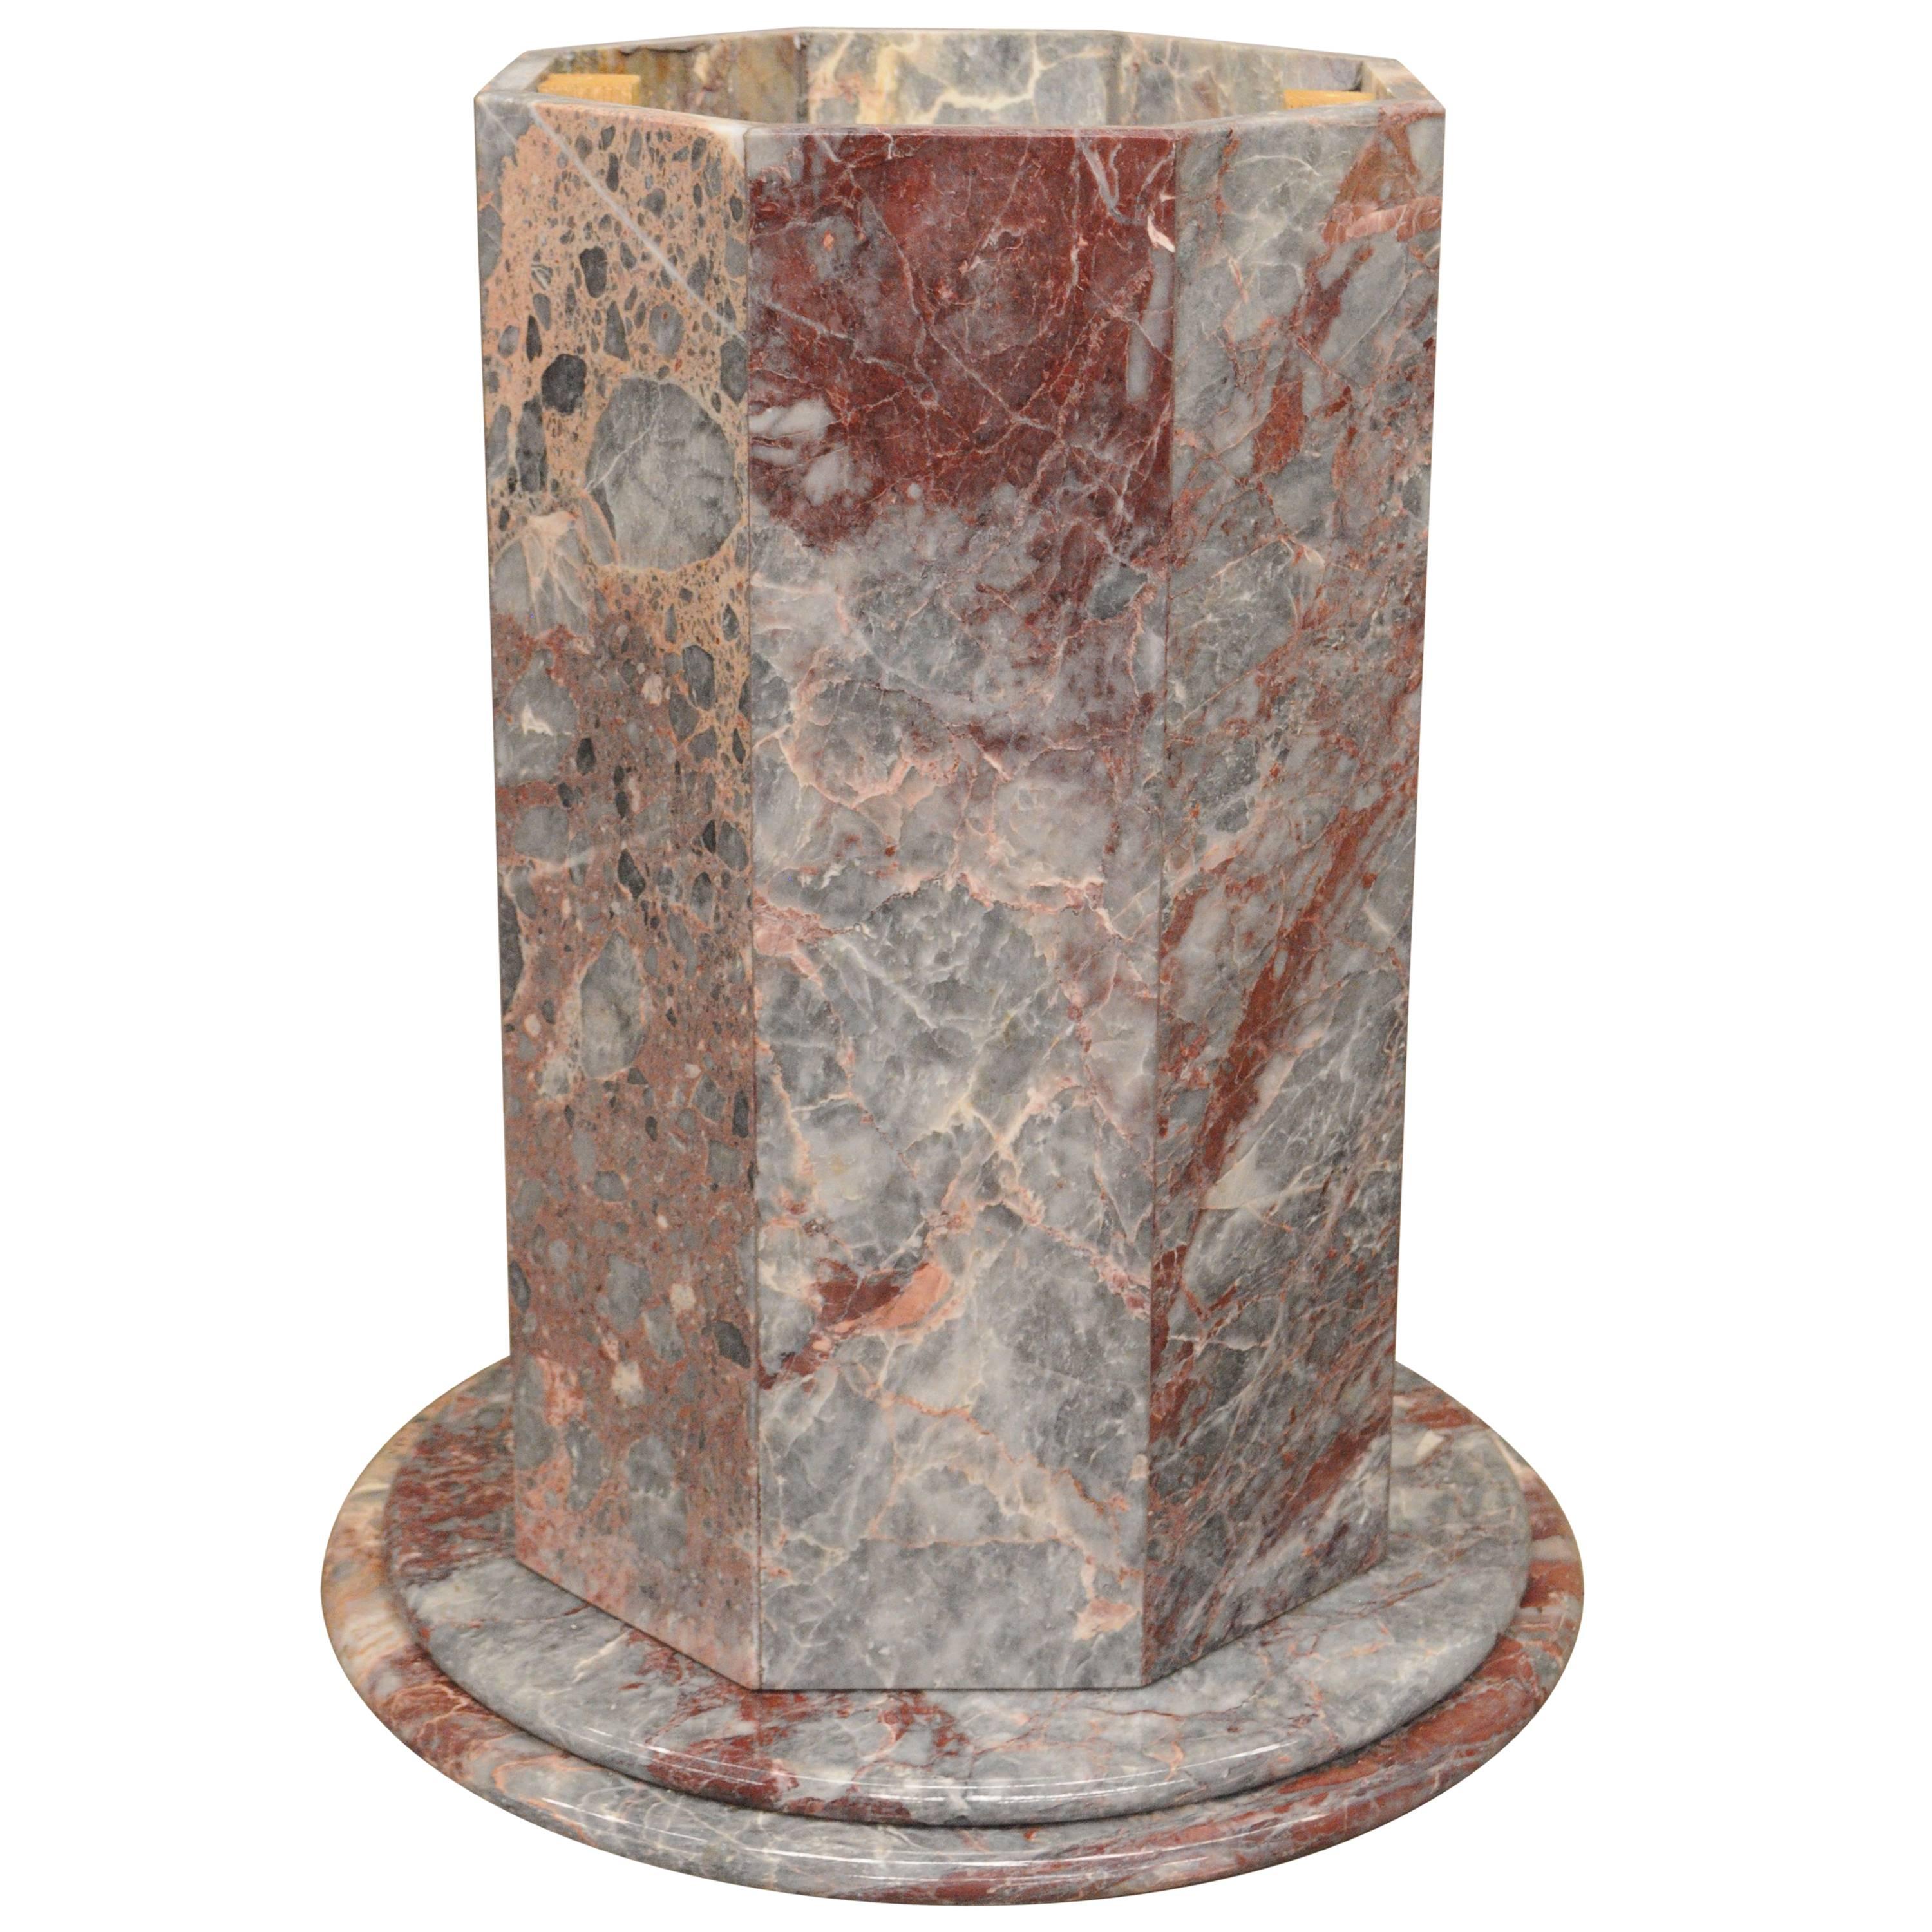 Vintage Italian Rogue Marble Octagonal Dining Table Pedestal Base Grey Pink Vein